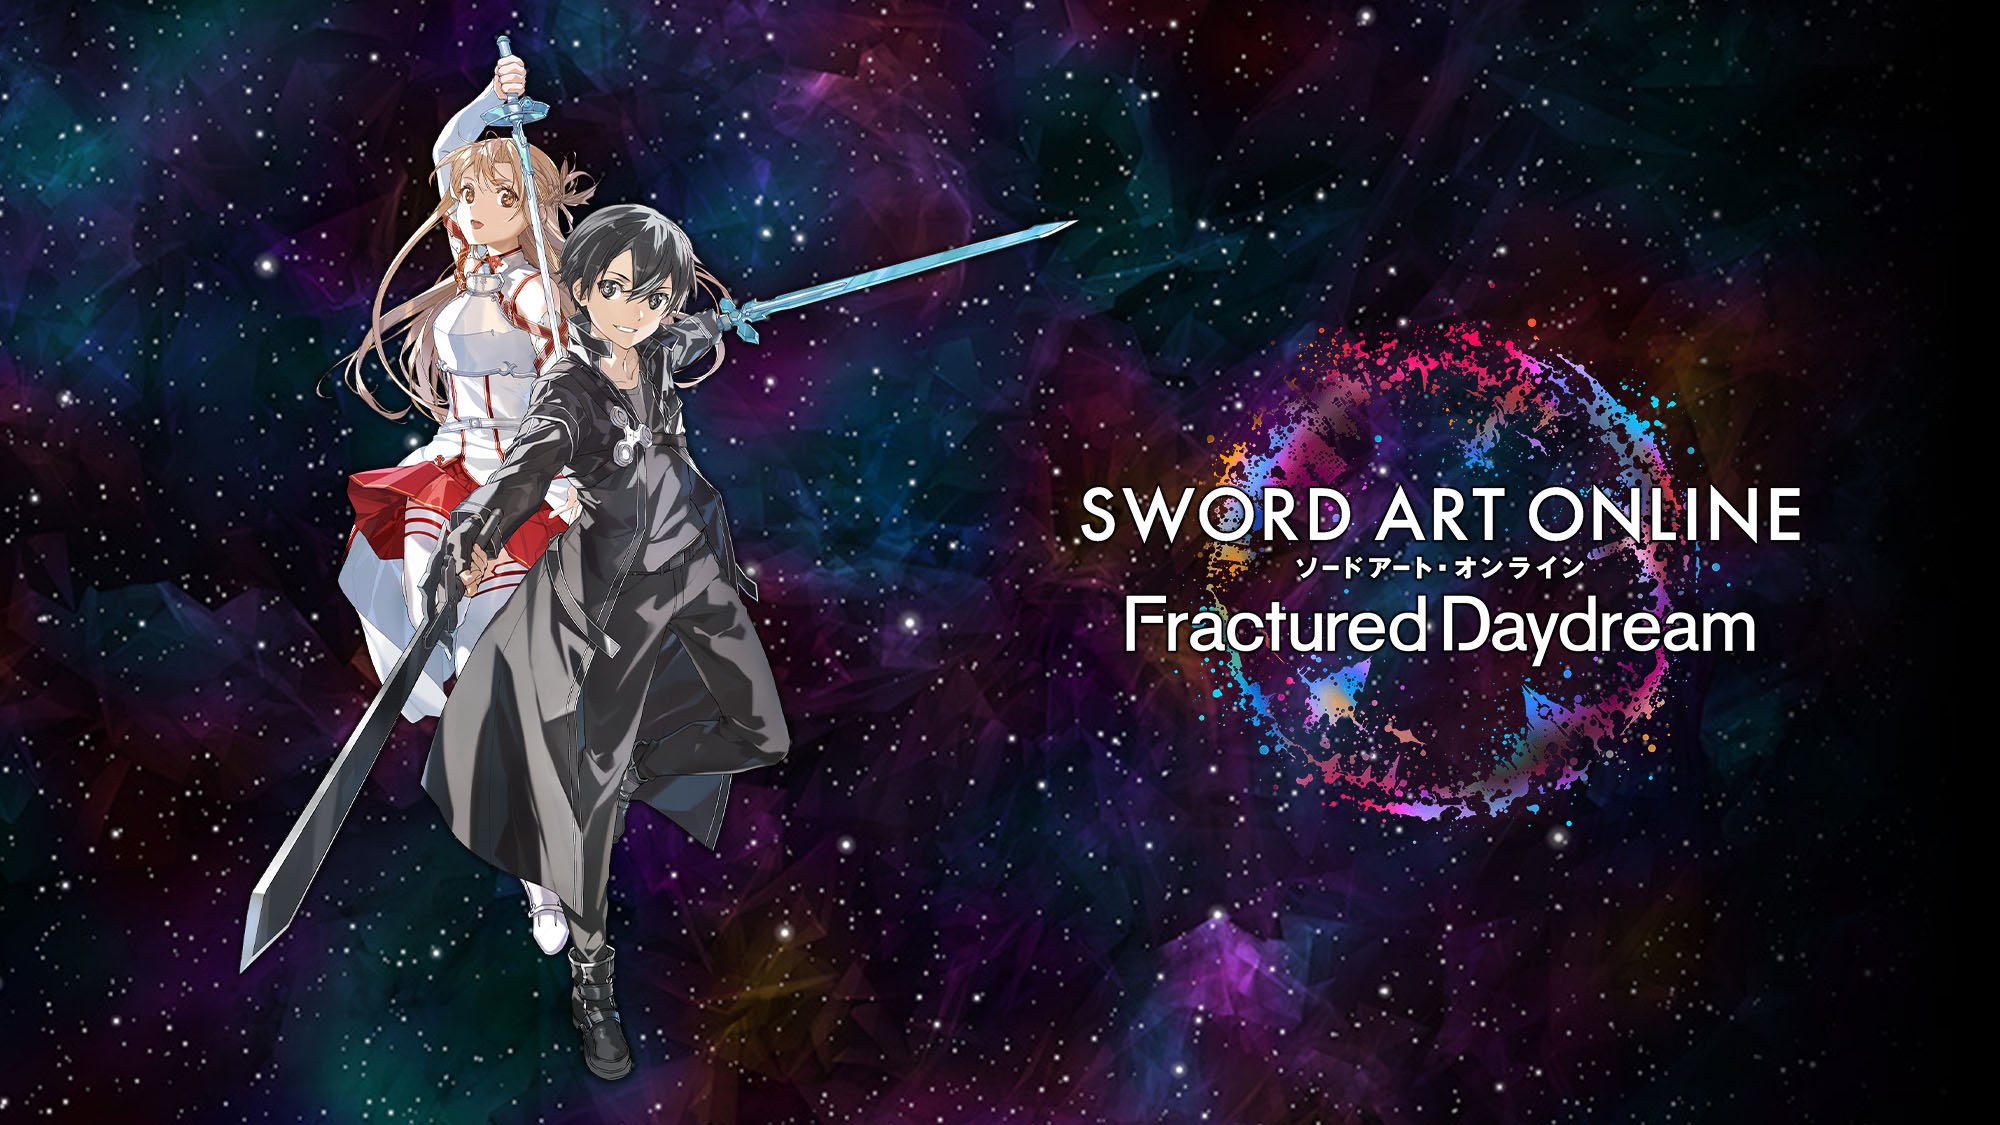 Sword Art Online - Official Trailer 